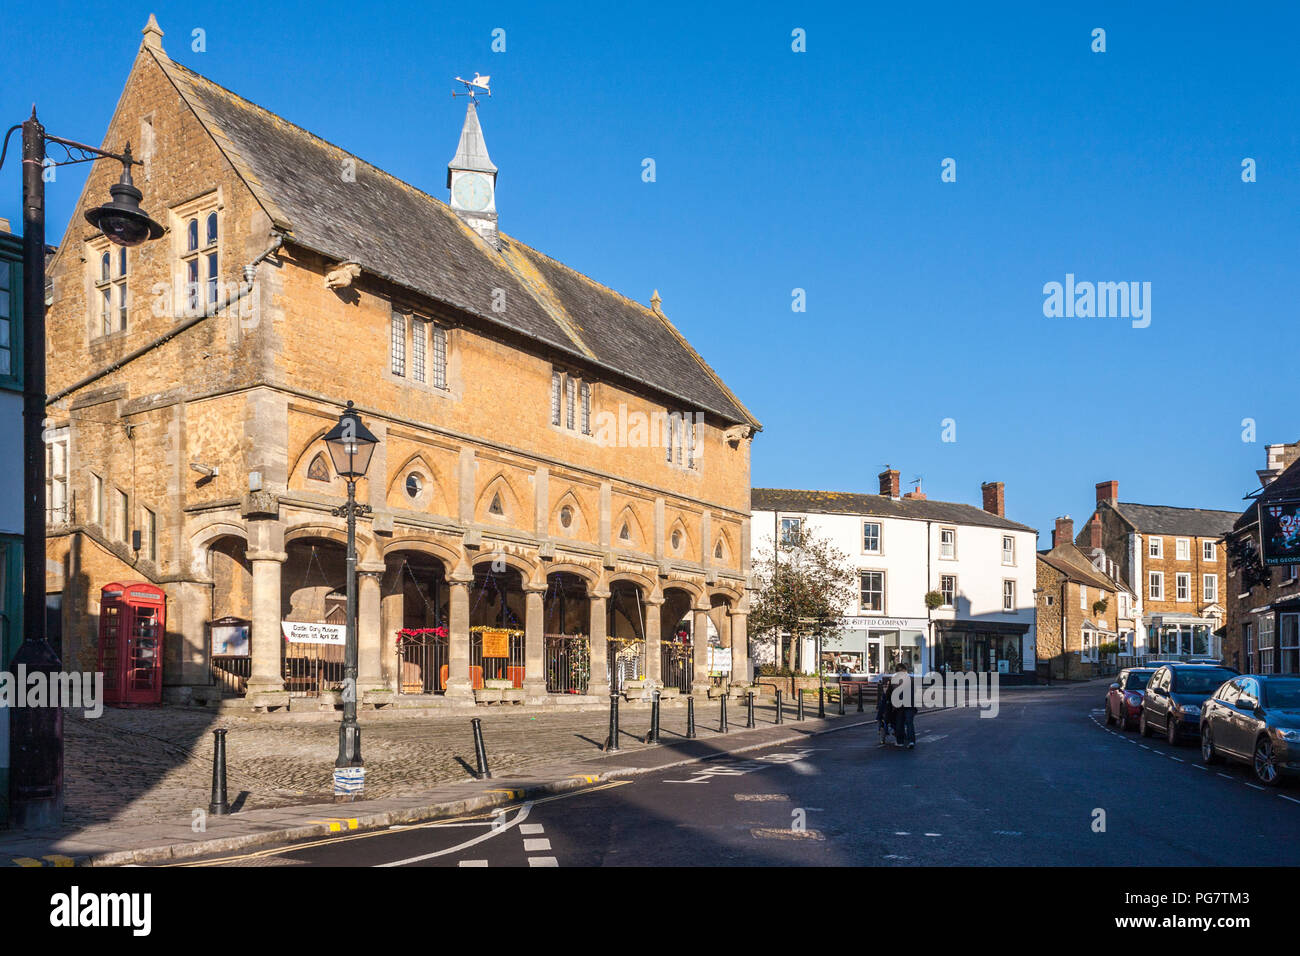 Le Market House, Castle Cary, Somerset, England, GB, UK Banque D'Images